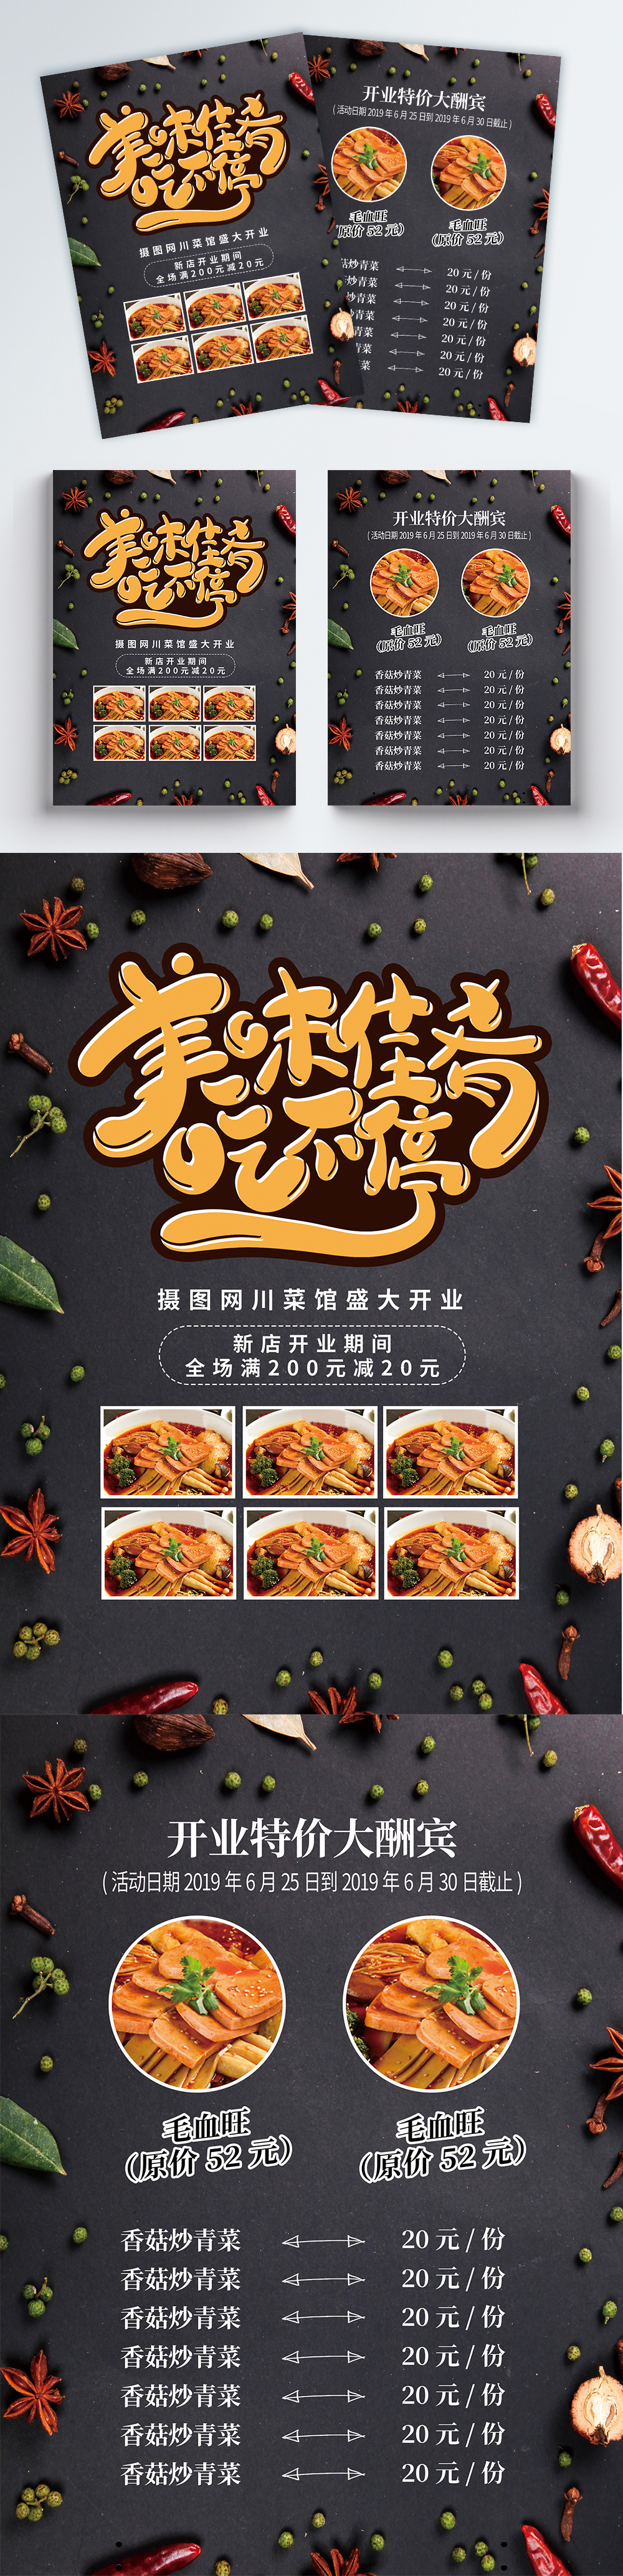 Restaurant Promotion Flyer Template Image Picture Free Download Lovepik Com